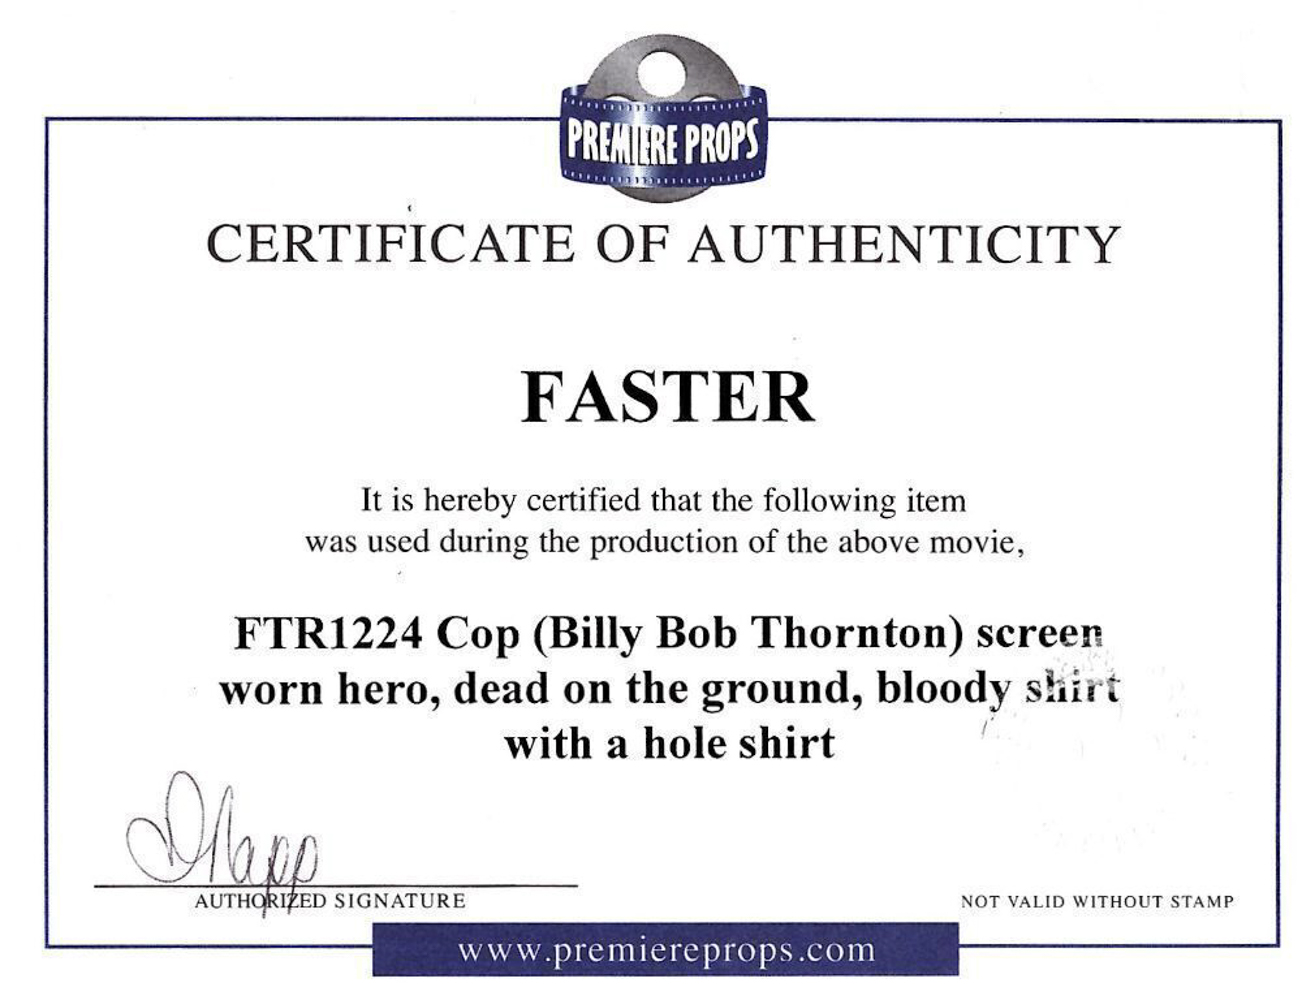 FASTER | BILLY BOB THORNTON "COP" SHIRT - Image 5 of 5